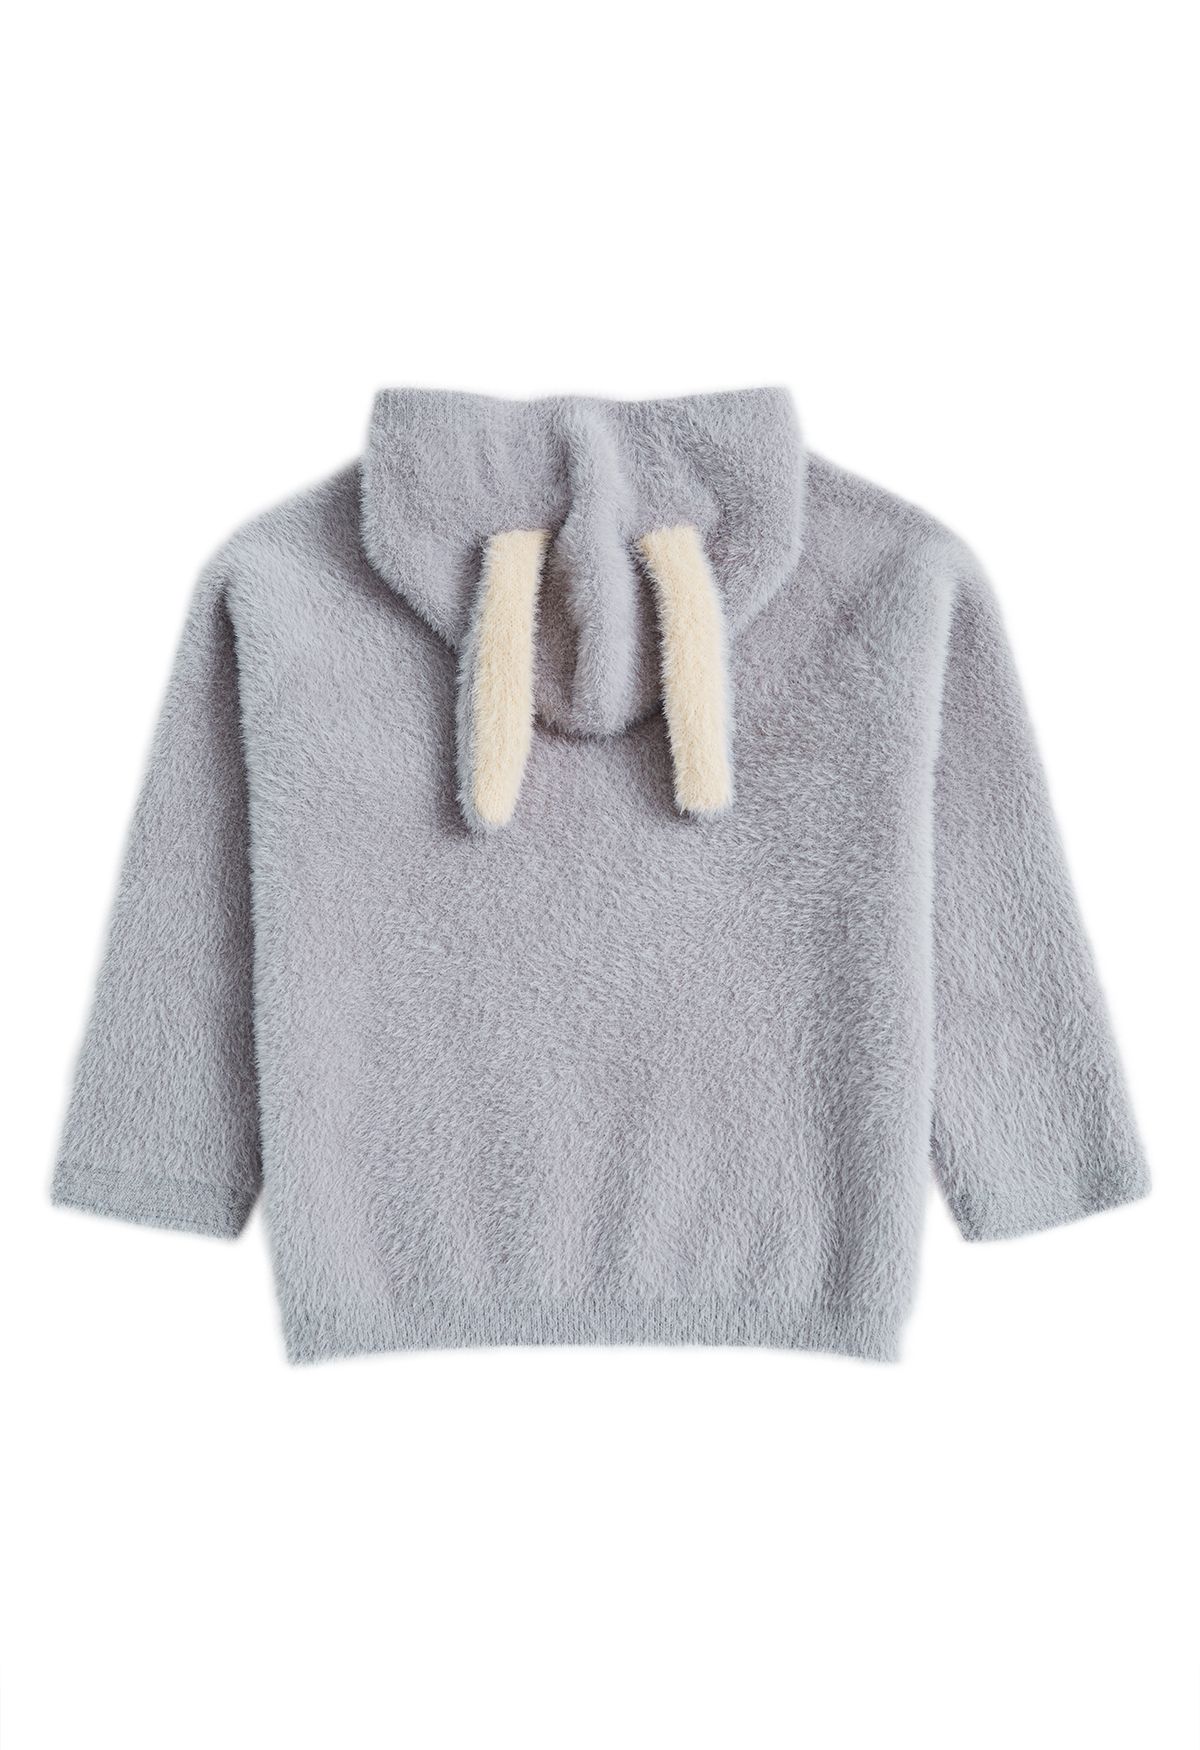 Suéter con capucha Lovely Bunny Fuzzy Knit en gris para niños